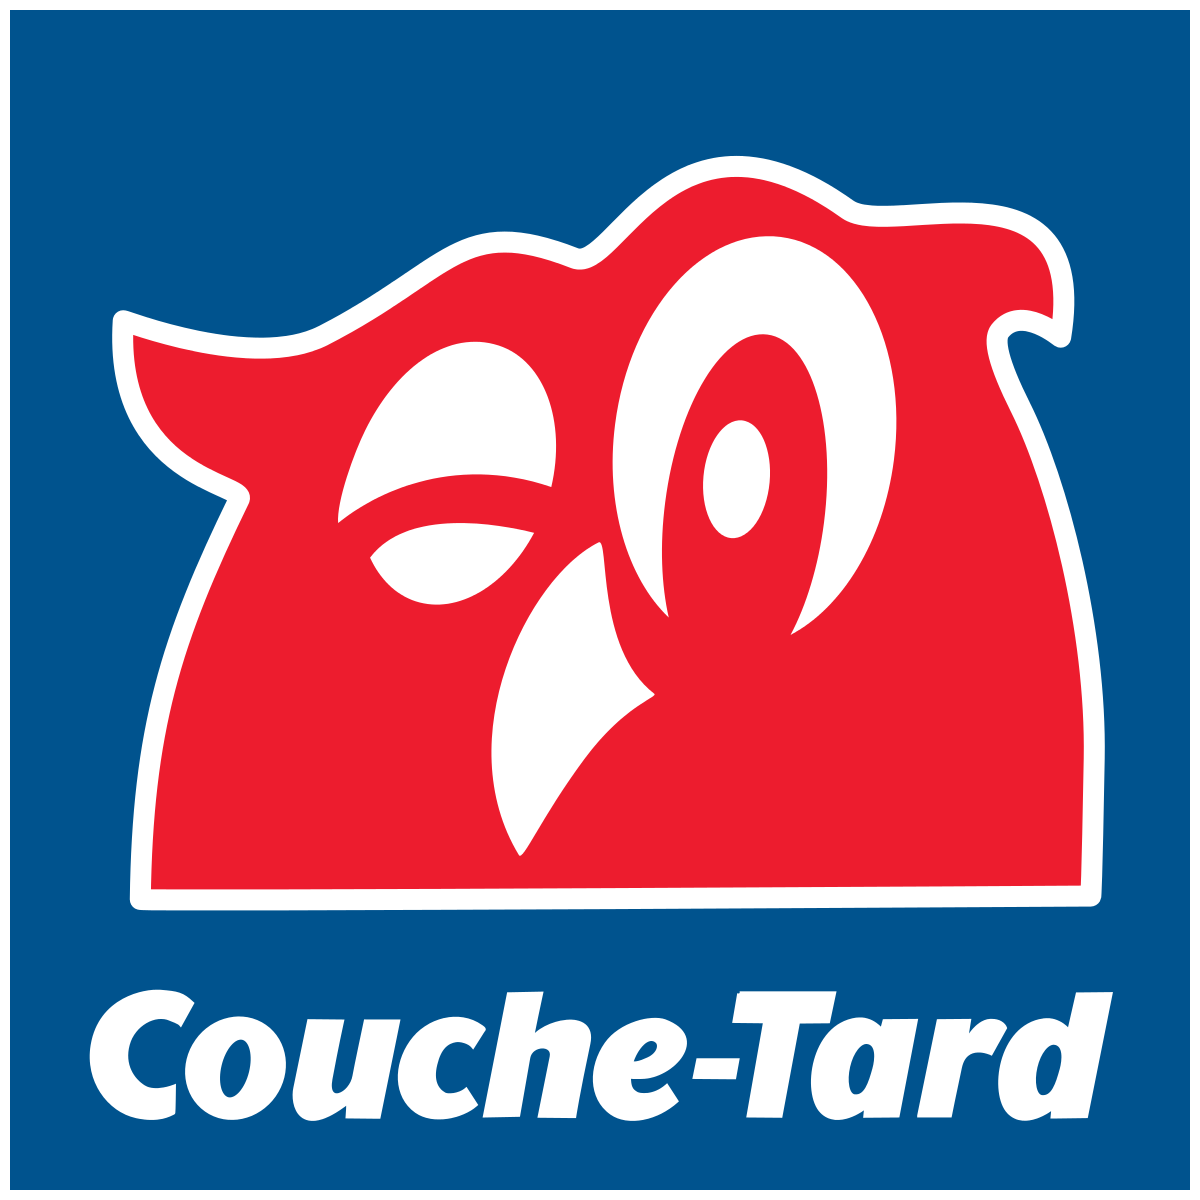 Alimentation Couche-Tard - Wikipedia